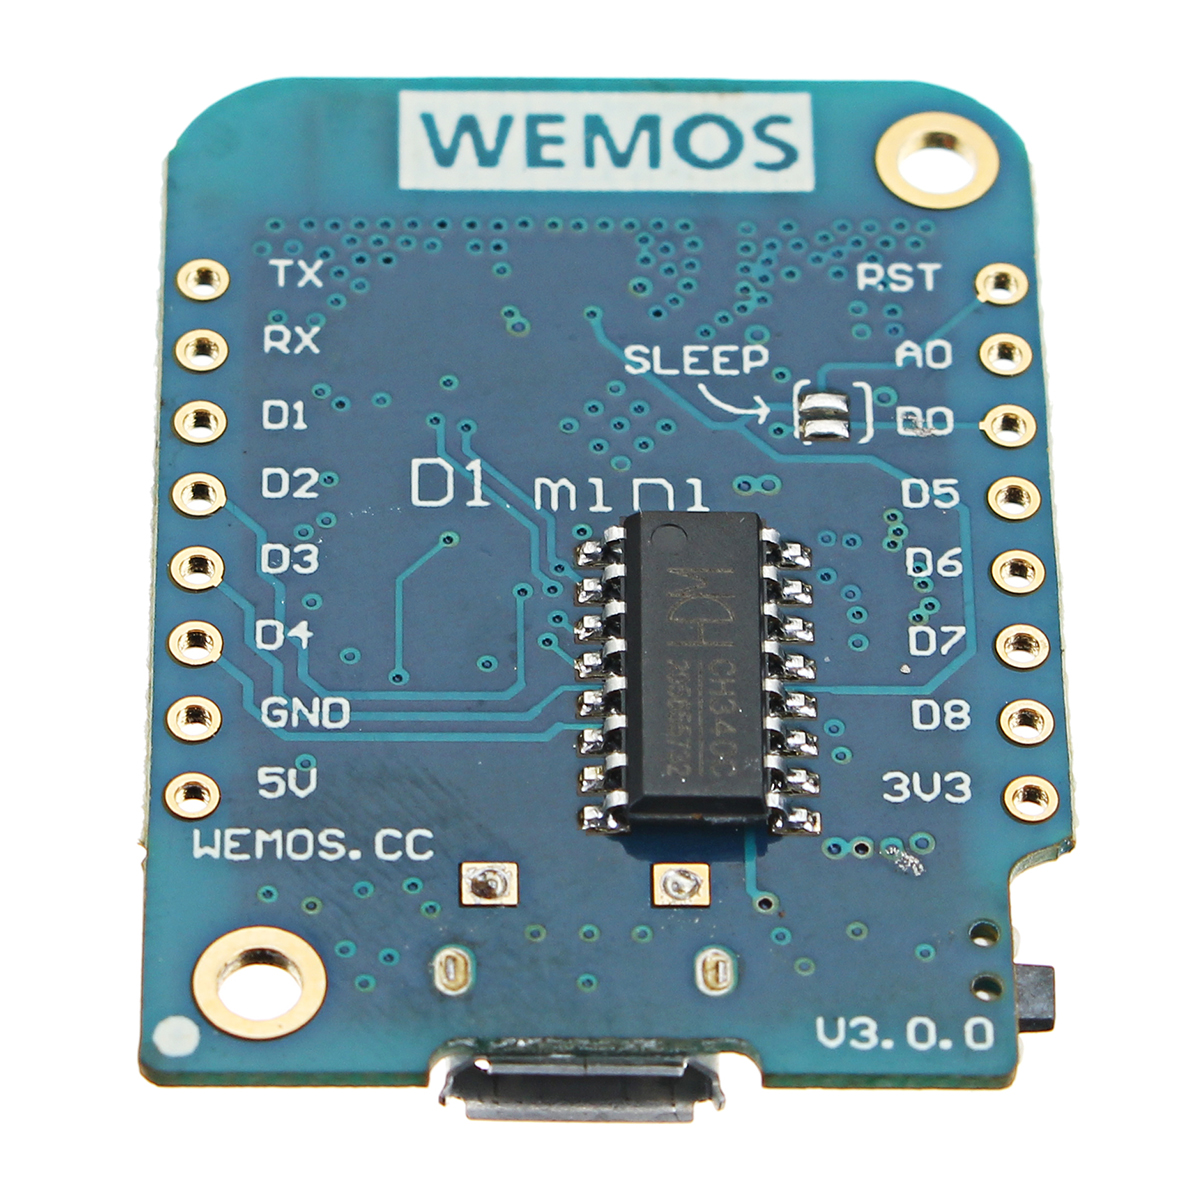 3pcs-D1-Mini-V300-WIFI-Internet-Of-Things-Development-Board-Based-ESP8266-4MB-Geekcreit-for-Arduino--1385322